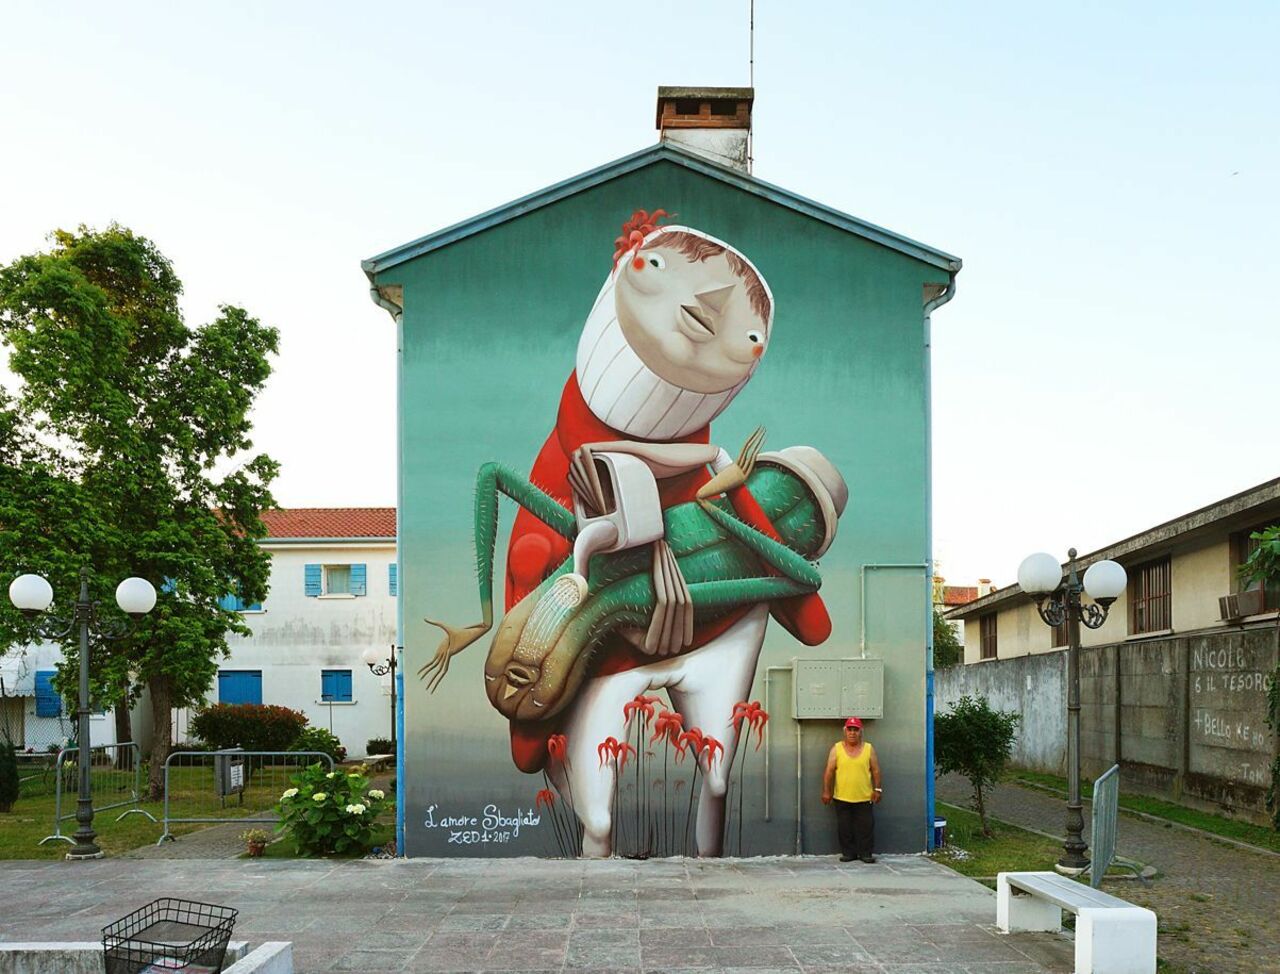 “The Wrong Love” by ZED1 in Dolo, Italy #streetart #mural #graffiti #art https://t.co/4VZOxMUWhq